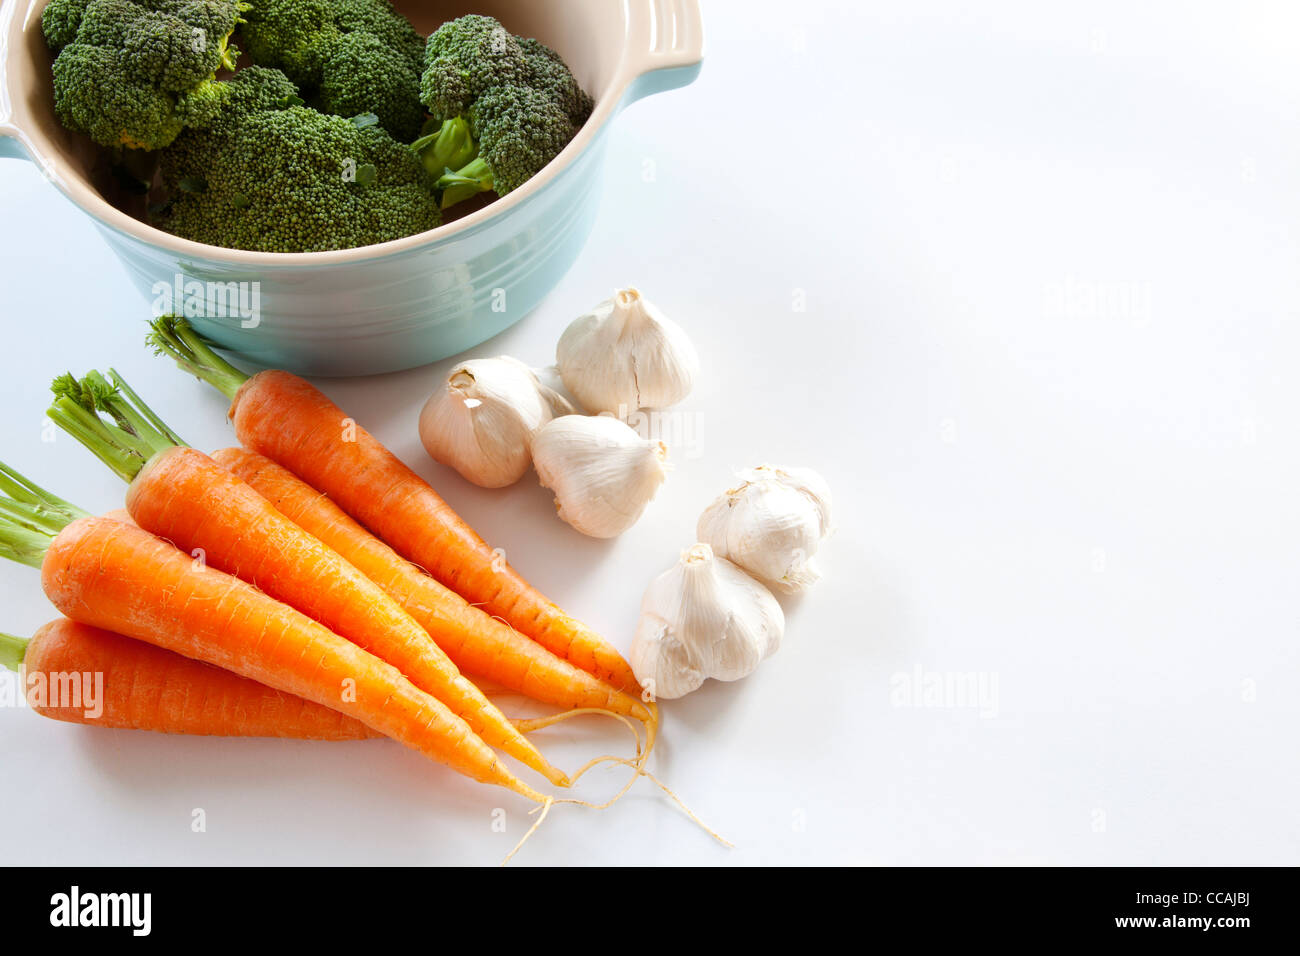 Carrots, Broccoli and Garlic Stock Photo